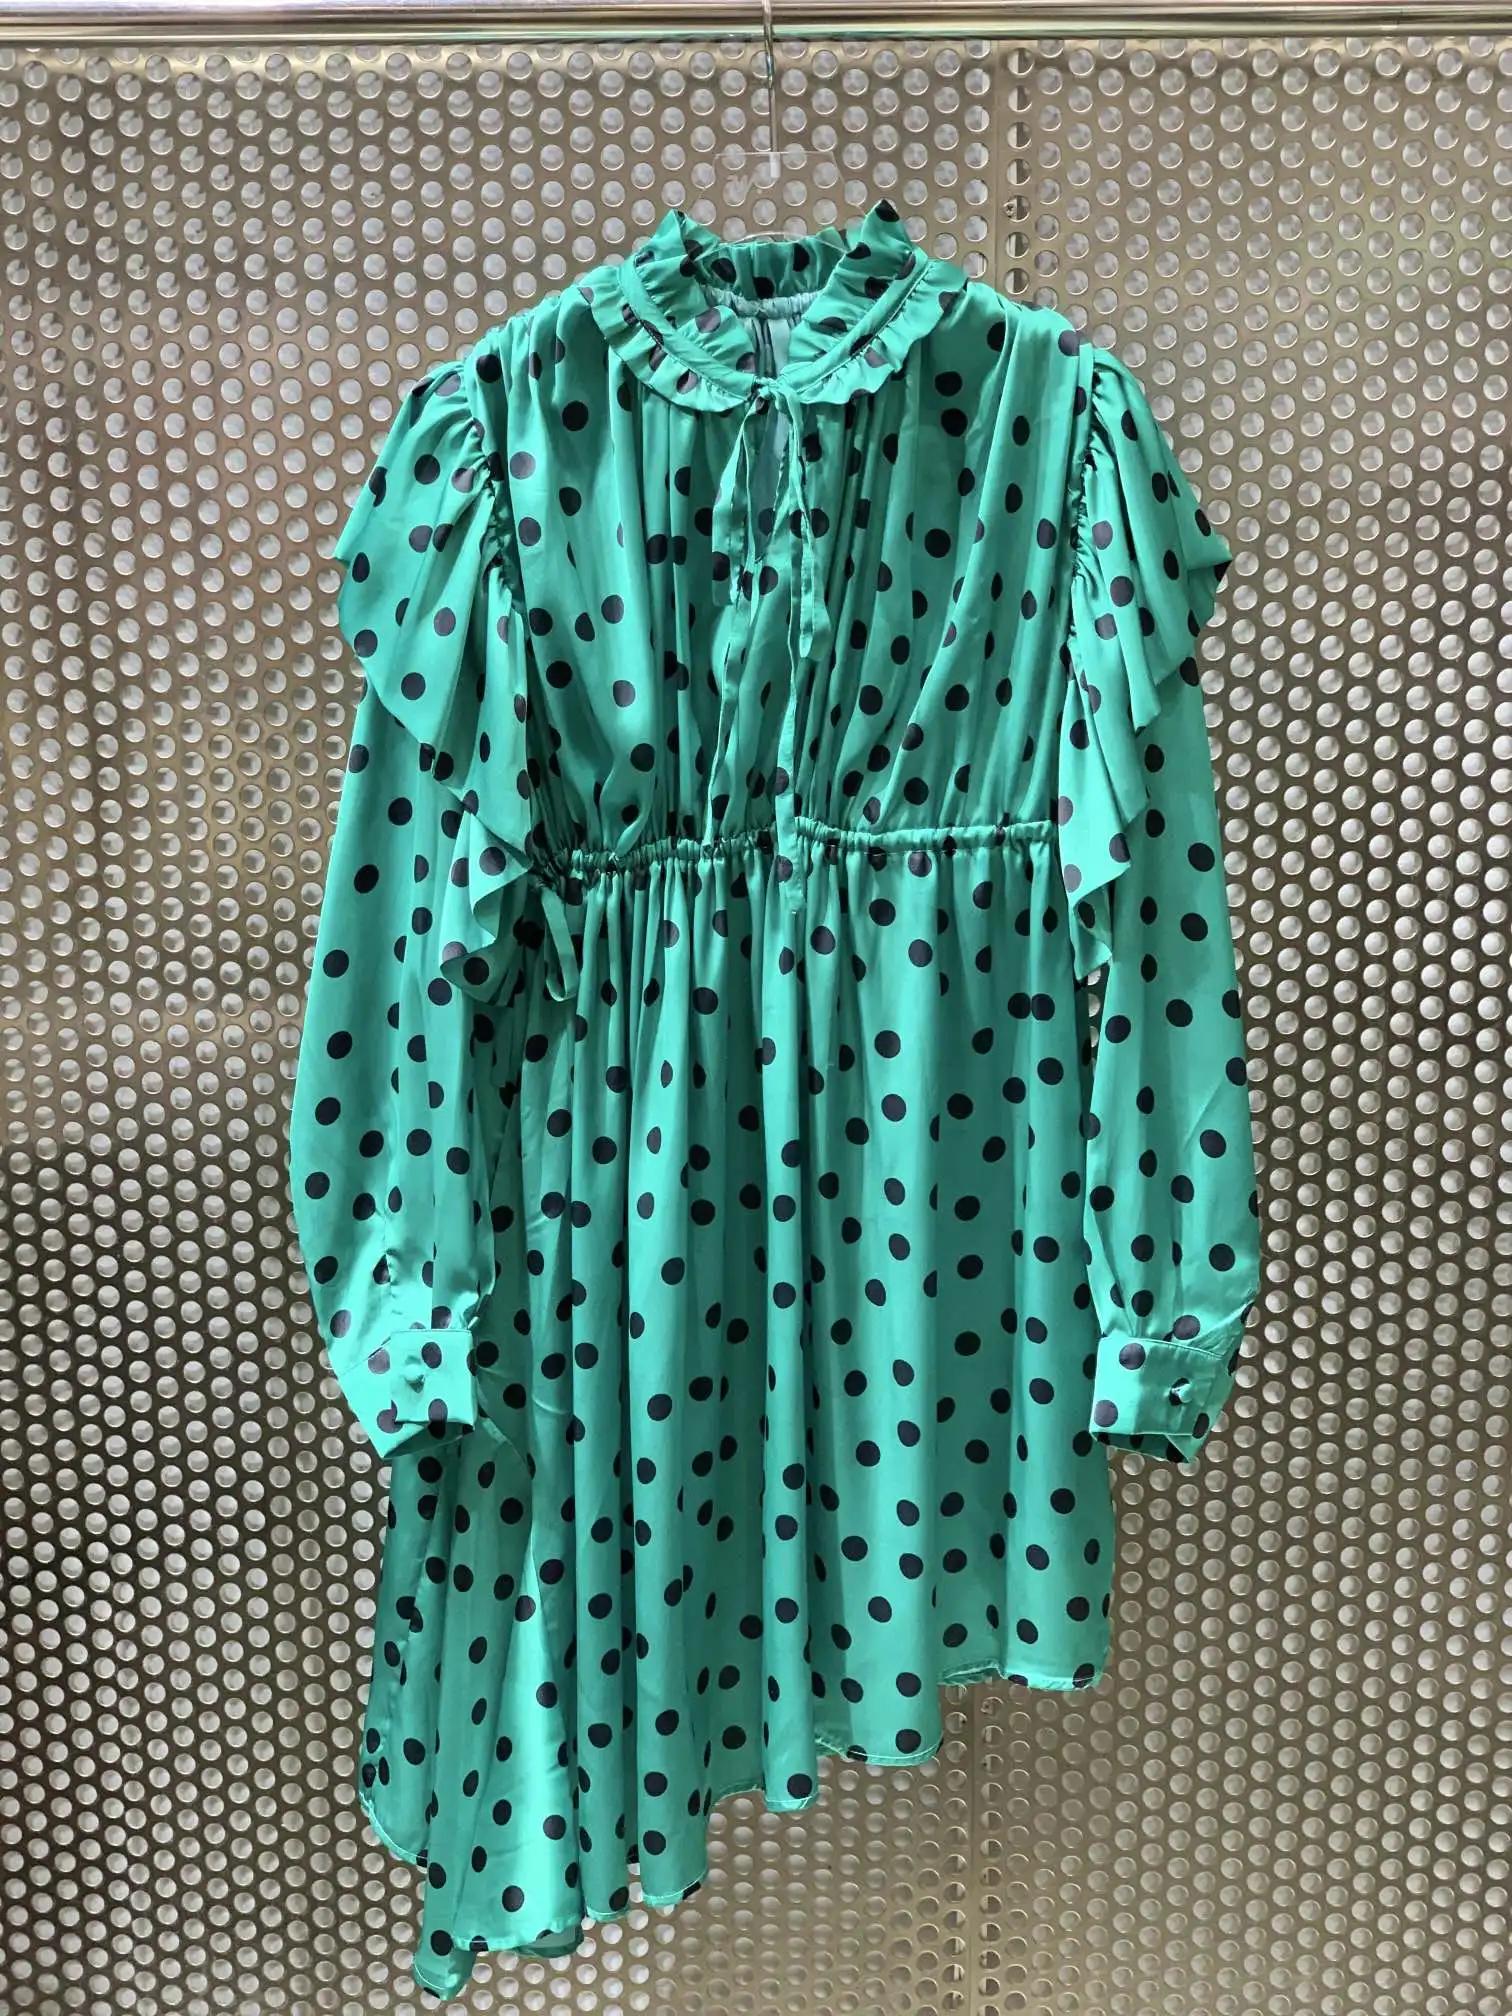 

Ladies 2021 Fashion New Long Sleeve Stand Collar Bowknot Bevel Polka Dot Print Dress 0109